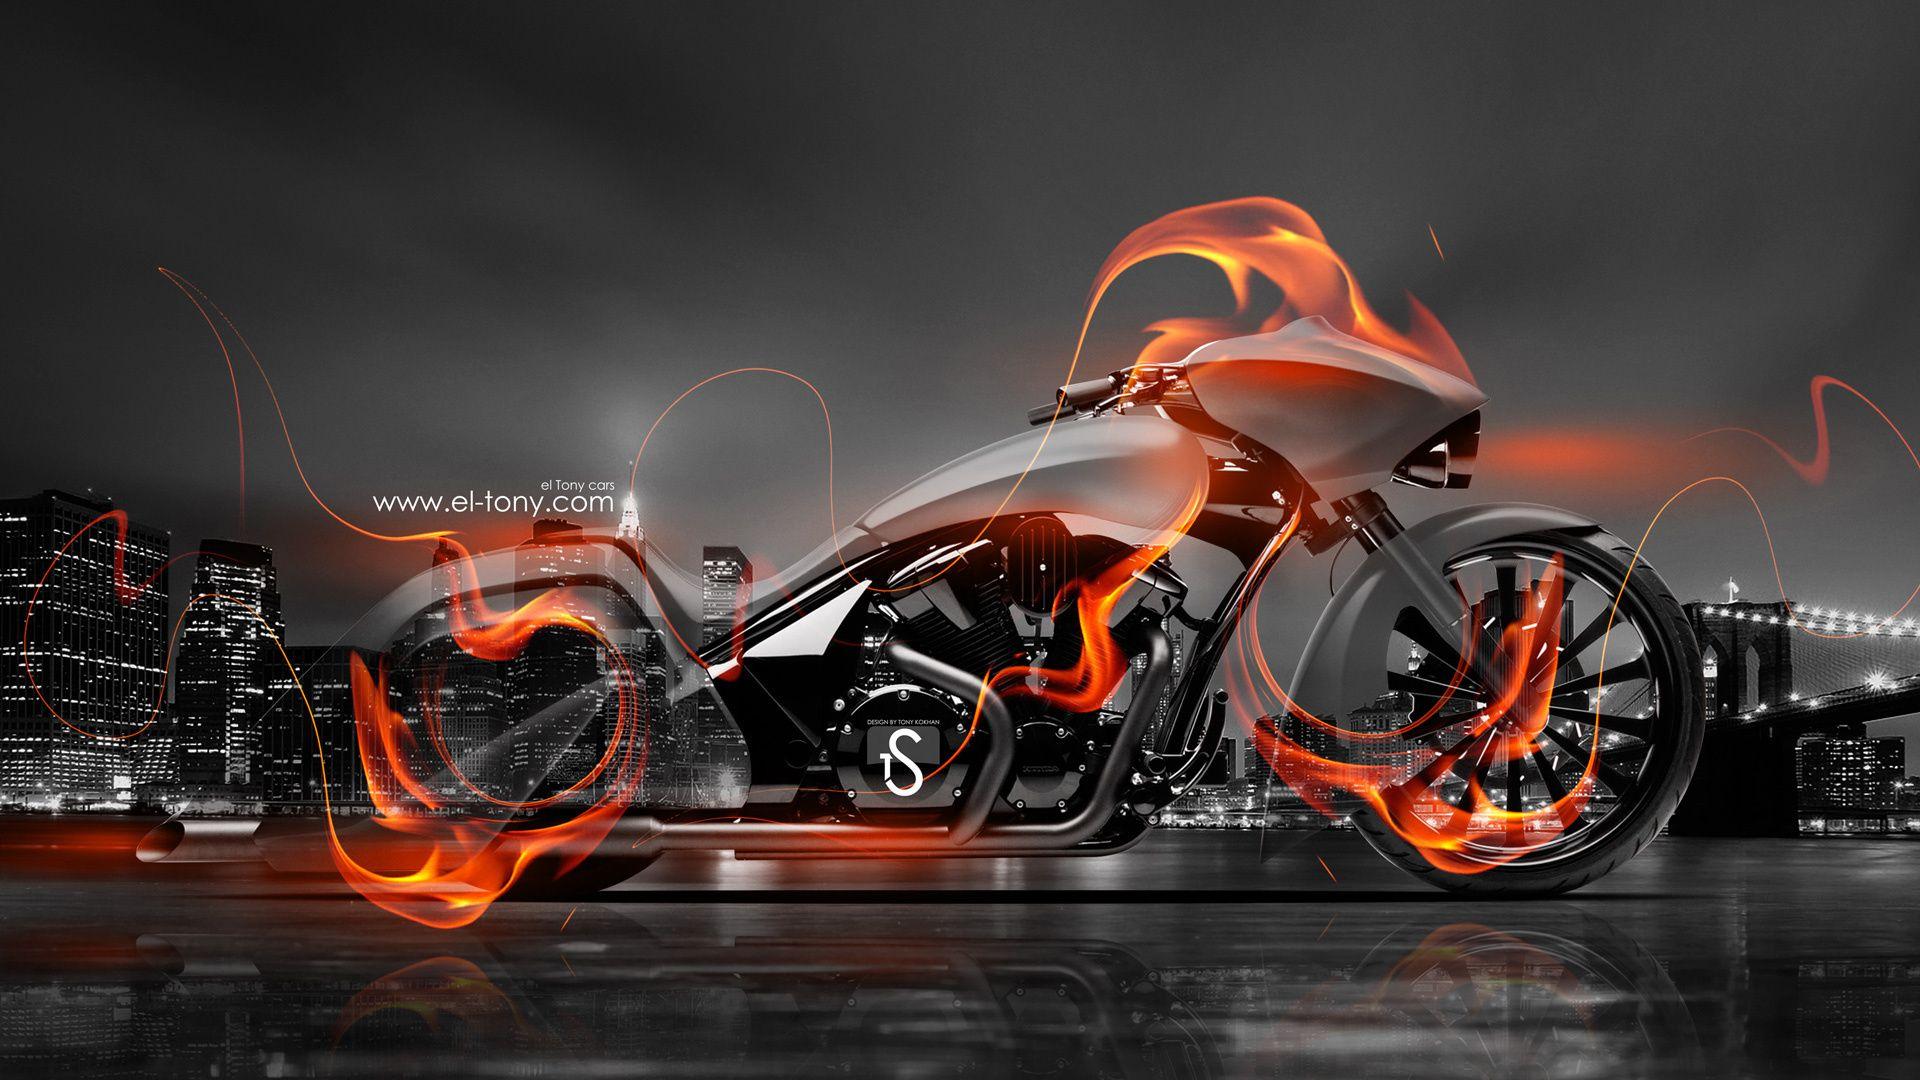 Wallpaper. Motorcycles. Tony Kokhan, Moto, bike, fire, Crystal